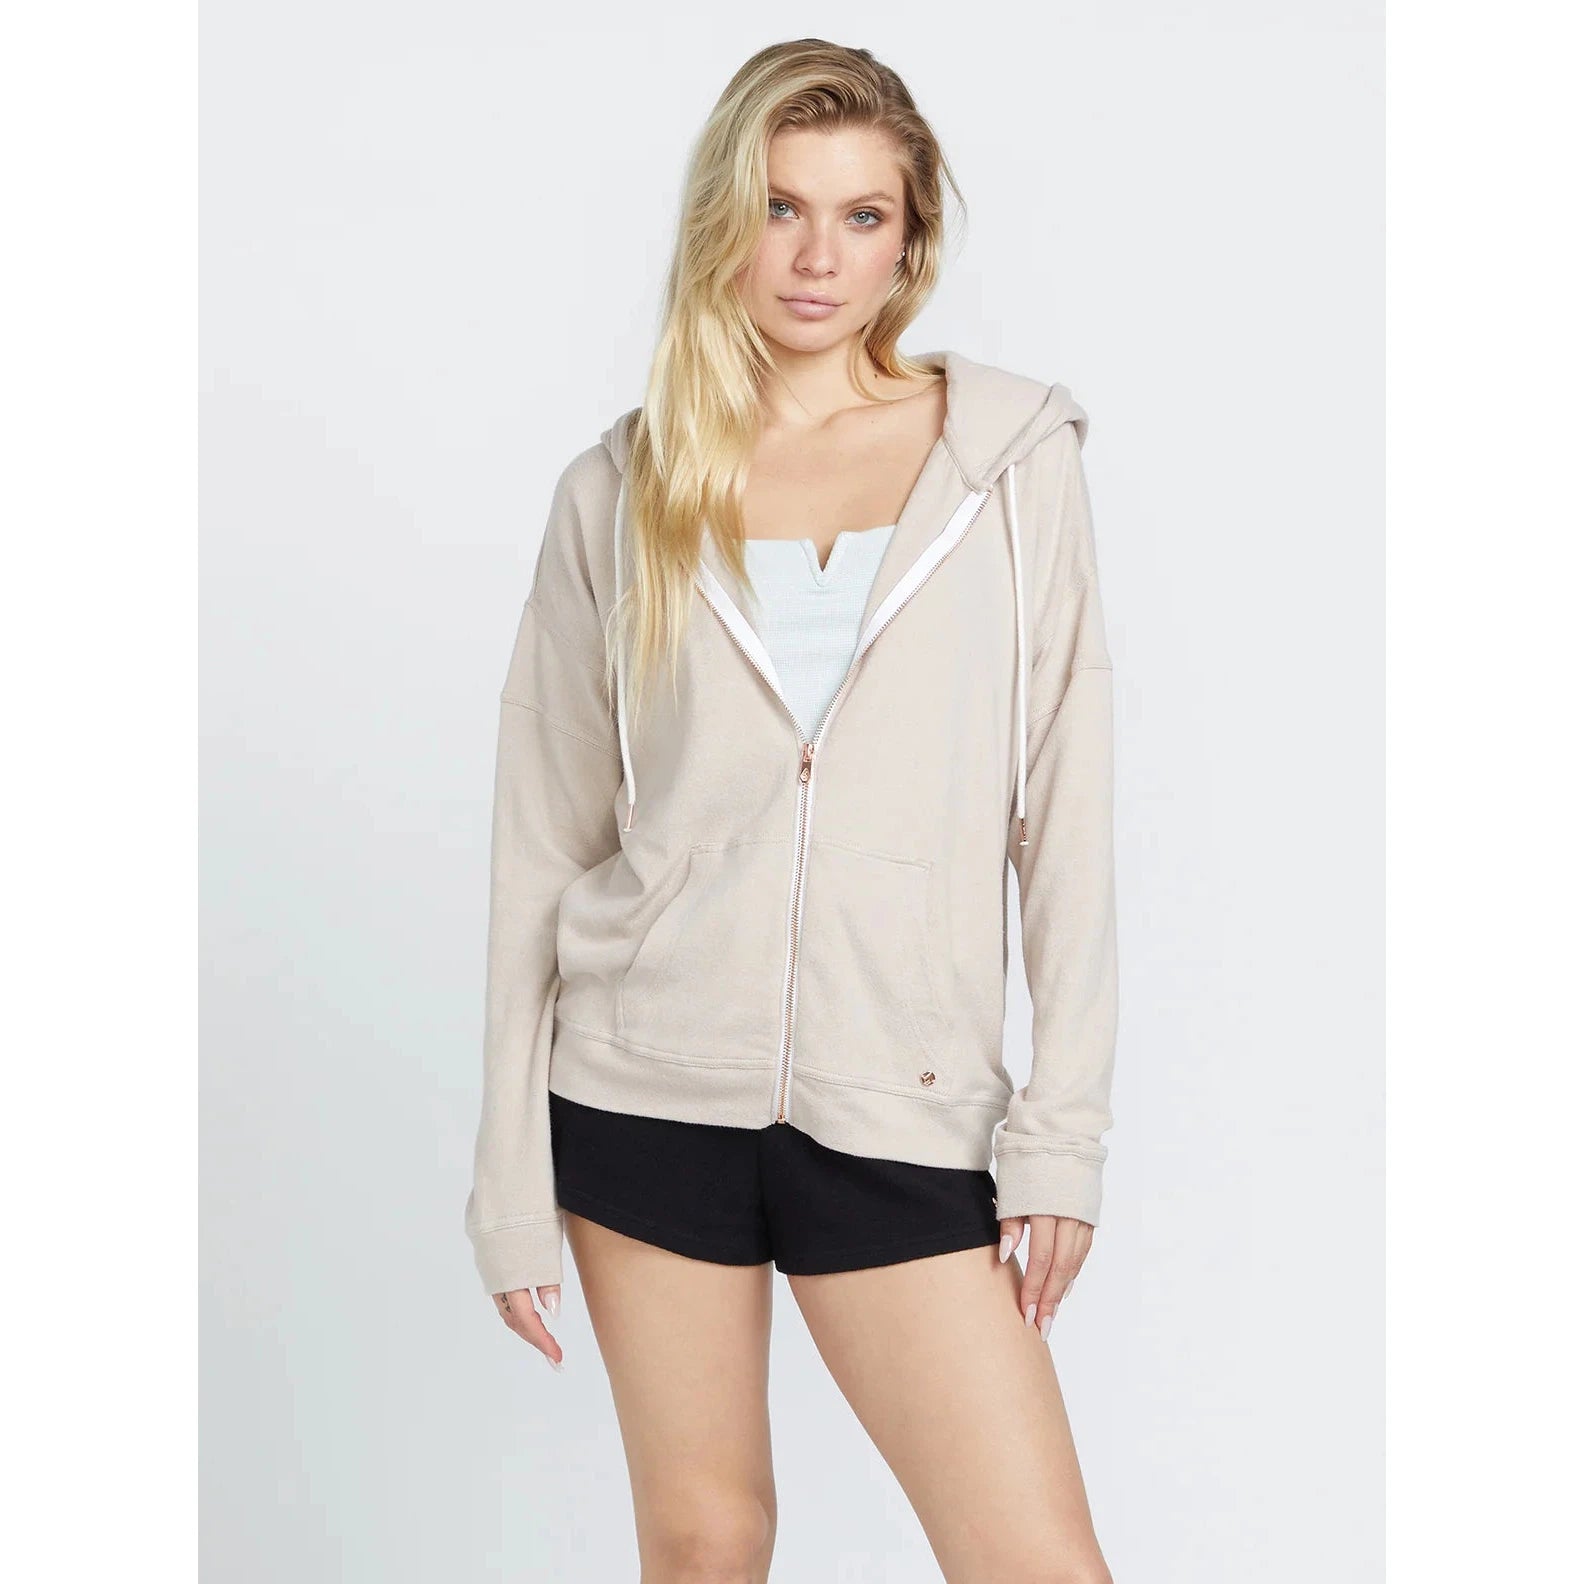 Women's Hoodies & Sweatshirts – Olive Boutique